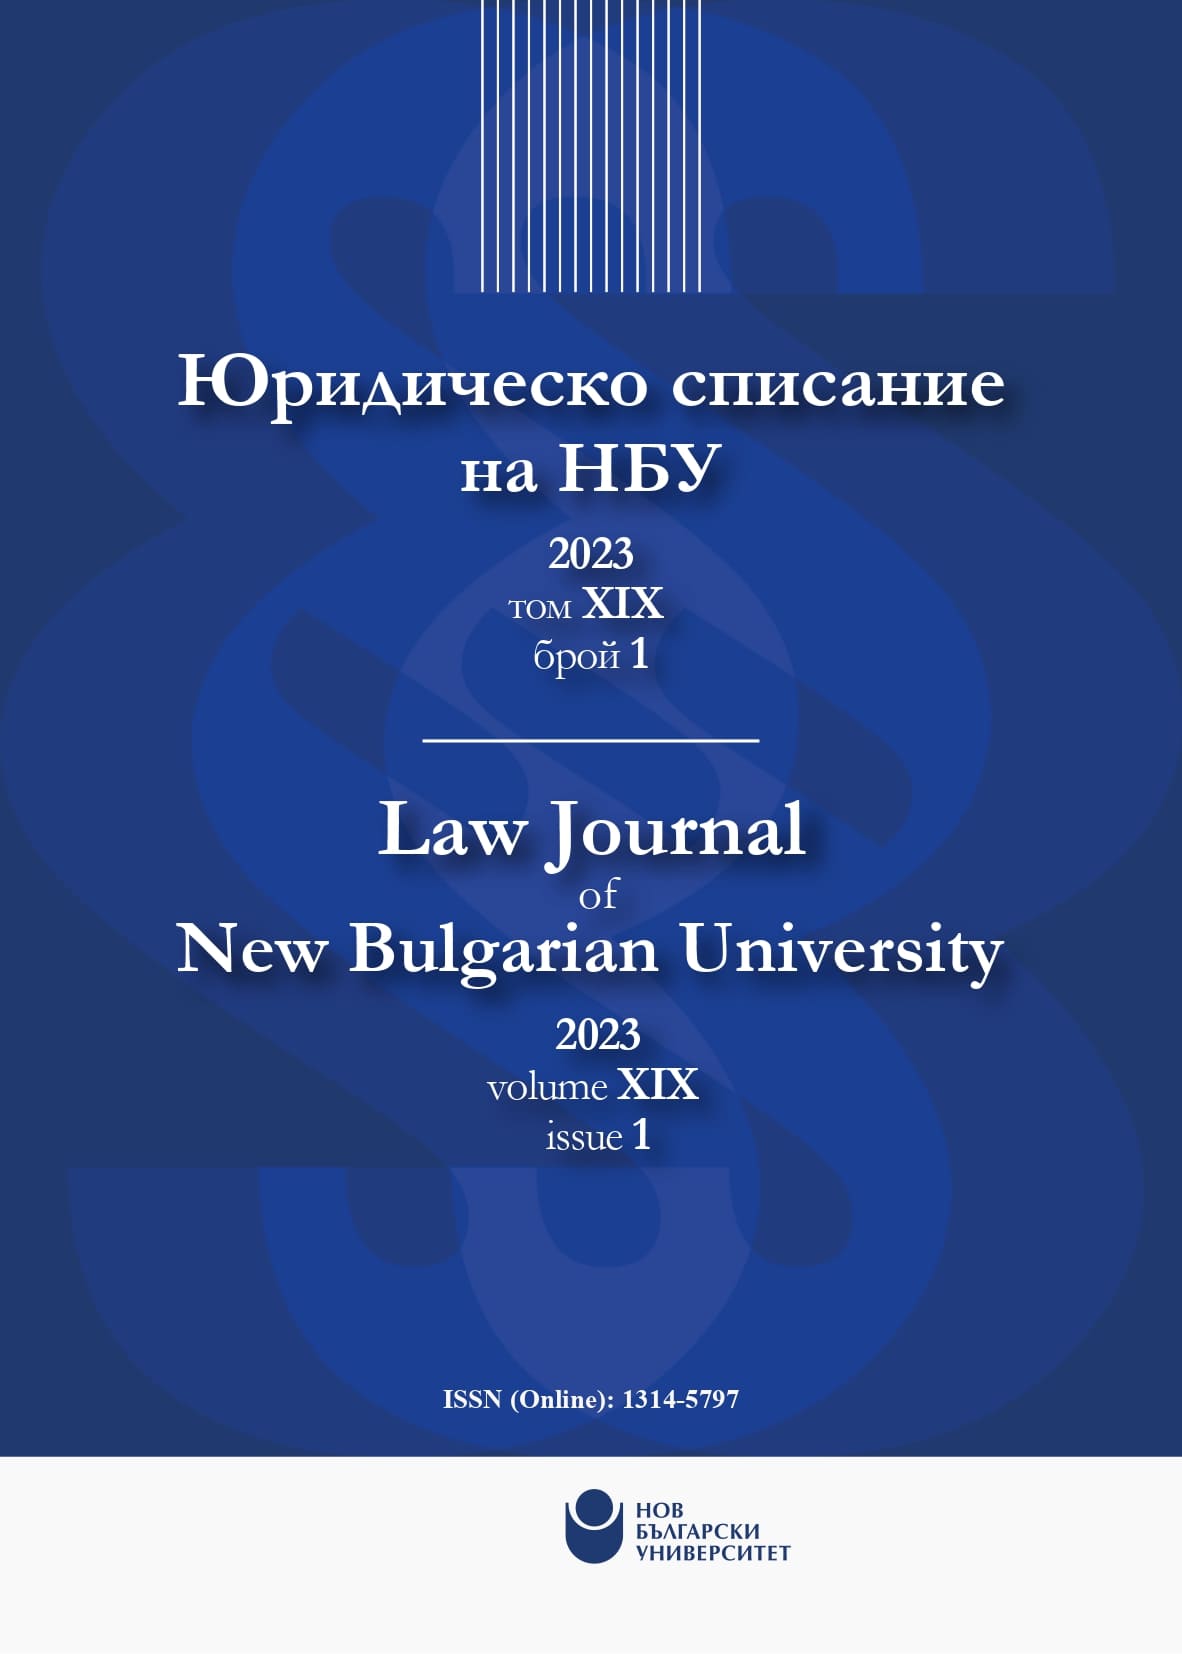 Law Journal of New Bulgarian University